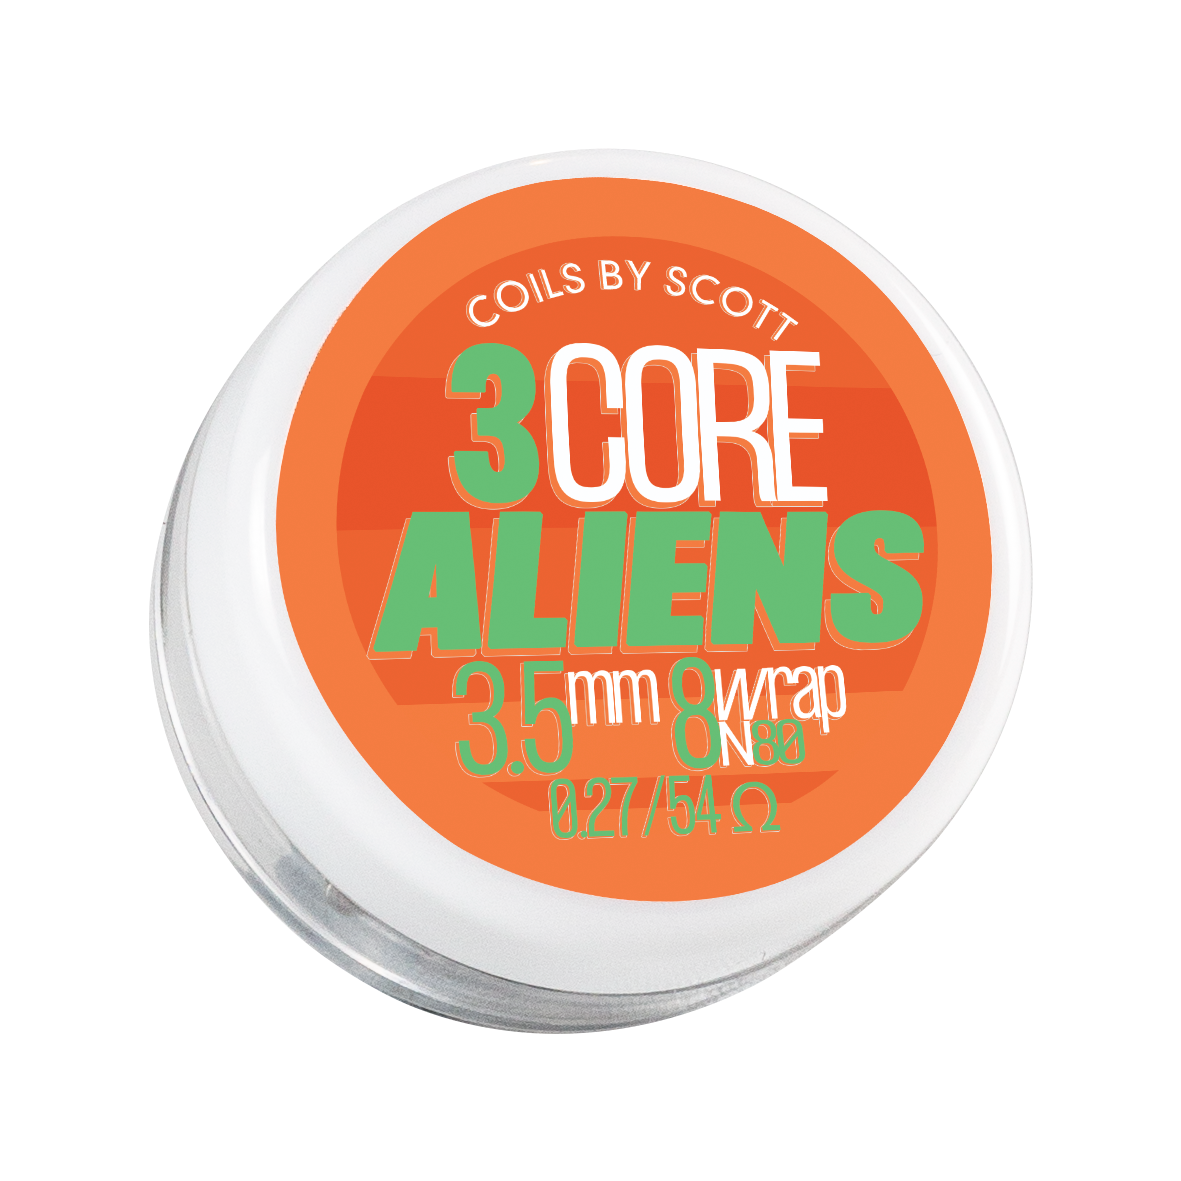 0.27 3 Core Aliens